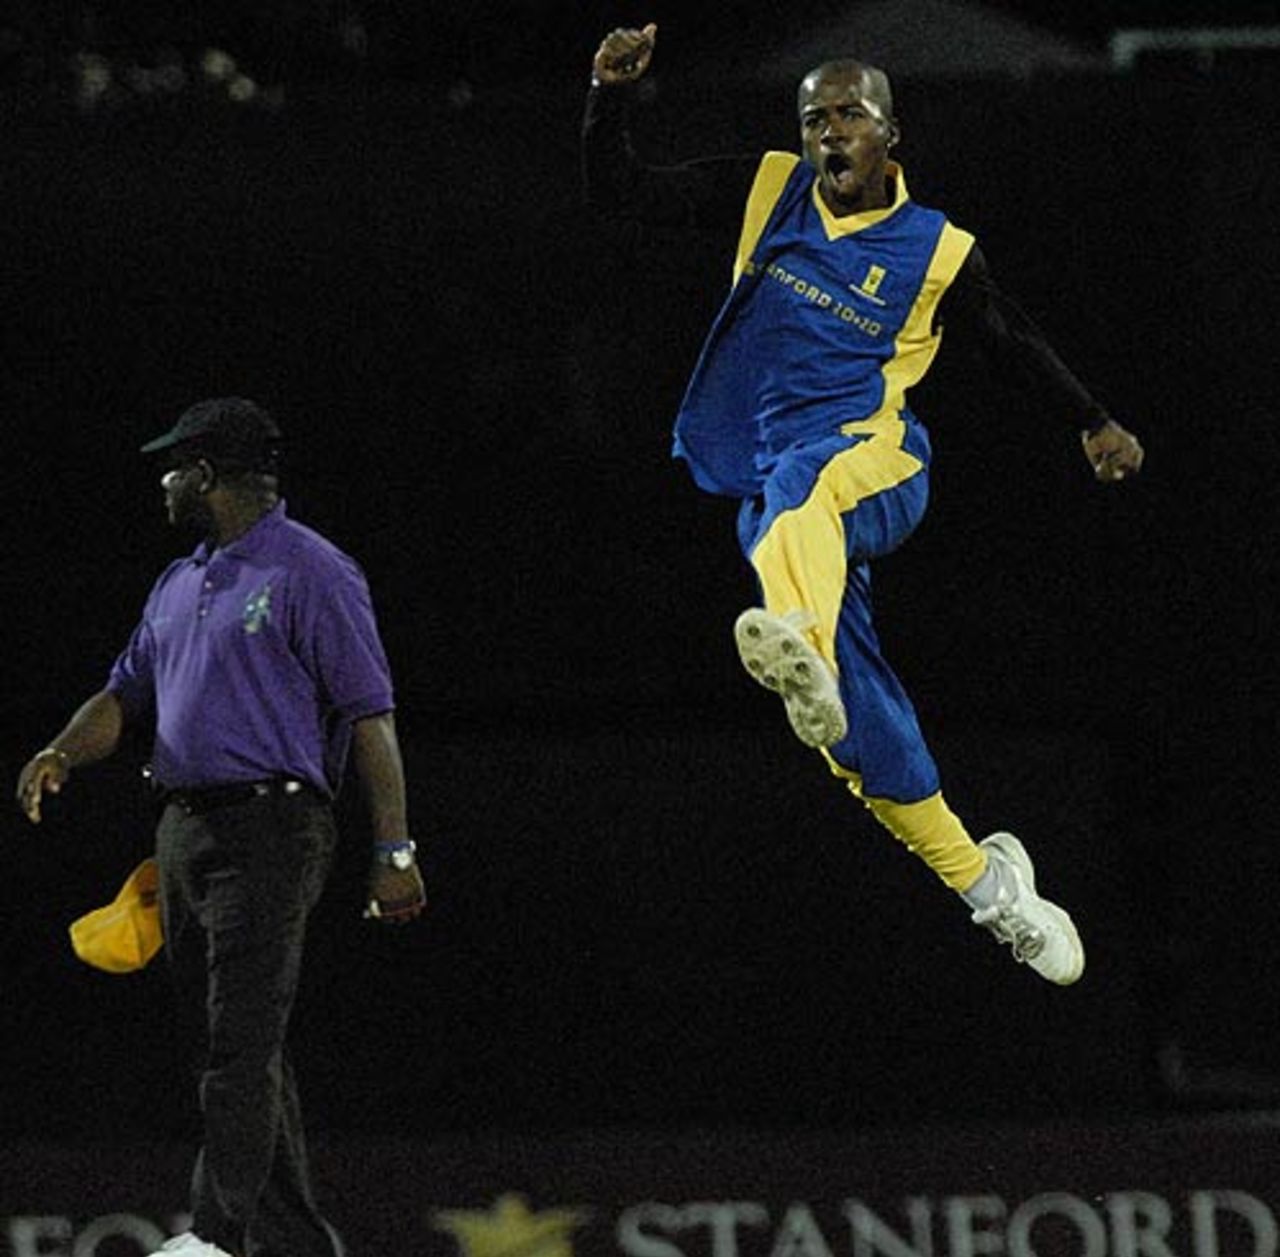 Derrick Bishop celebrates the dismissal of William Perkins, Barbados v Trinidad, Stanford 20-20, Antigua, February 22, 2008